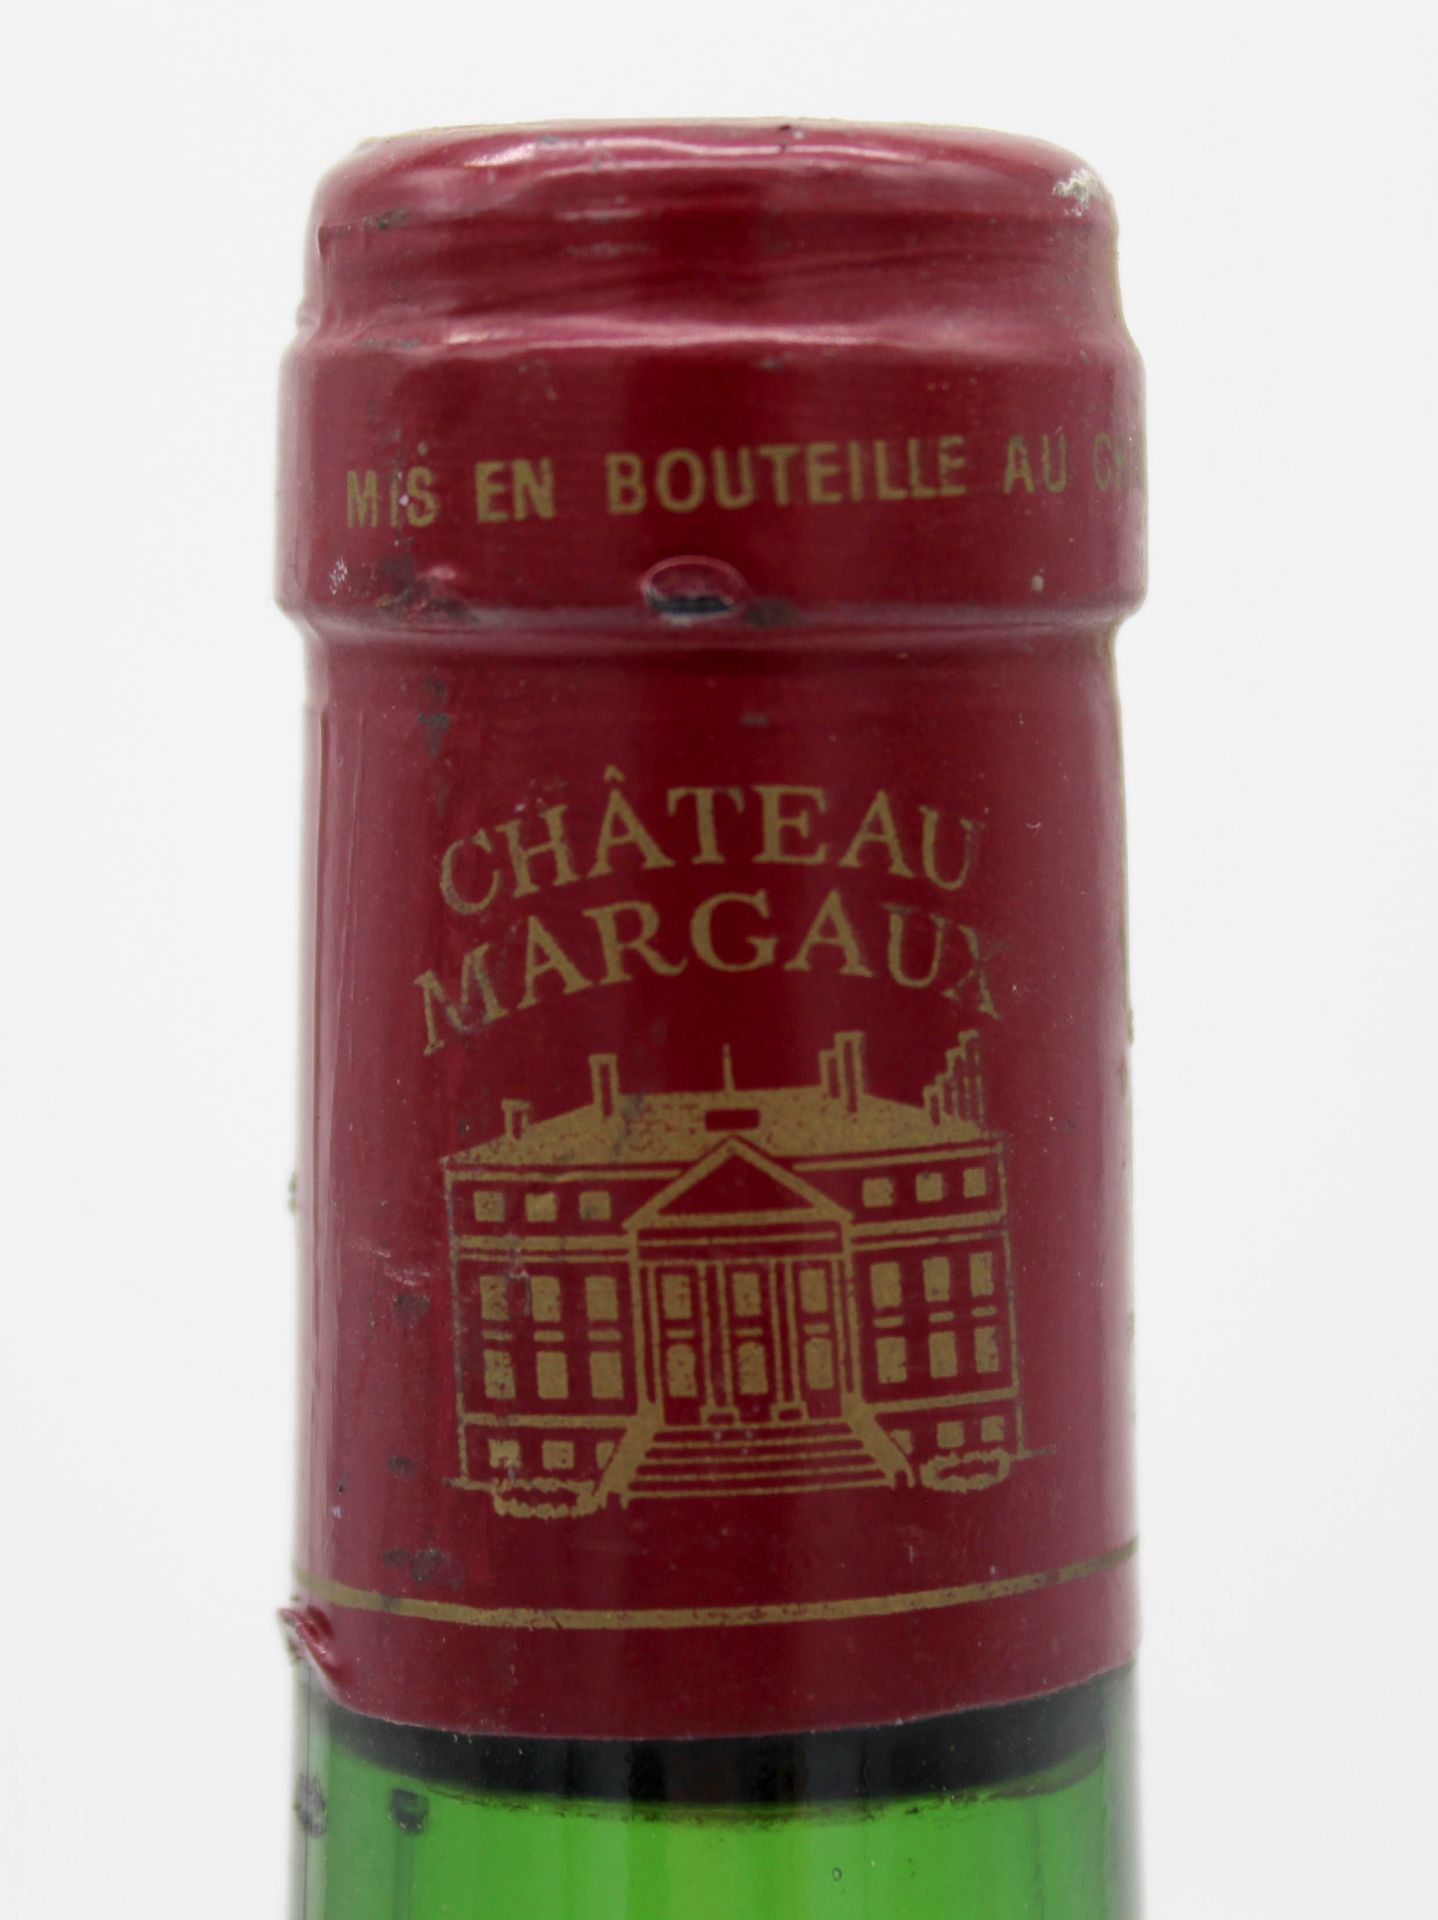 1982 Chateau Margaux, Margaux AOC, France. Eine ganze Flasche. - Image 9 of 10